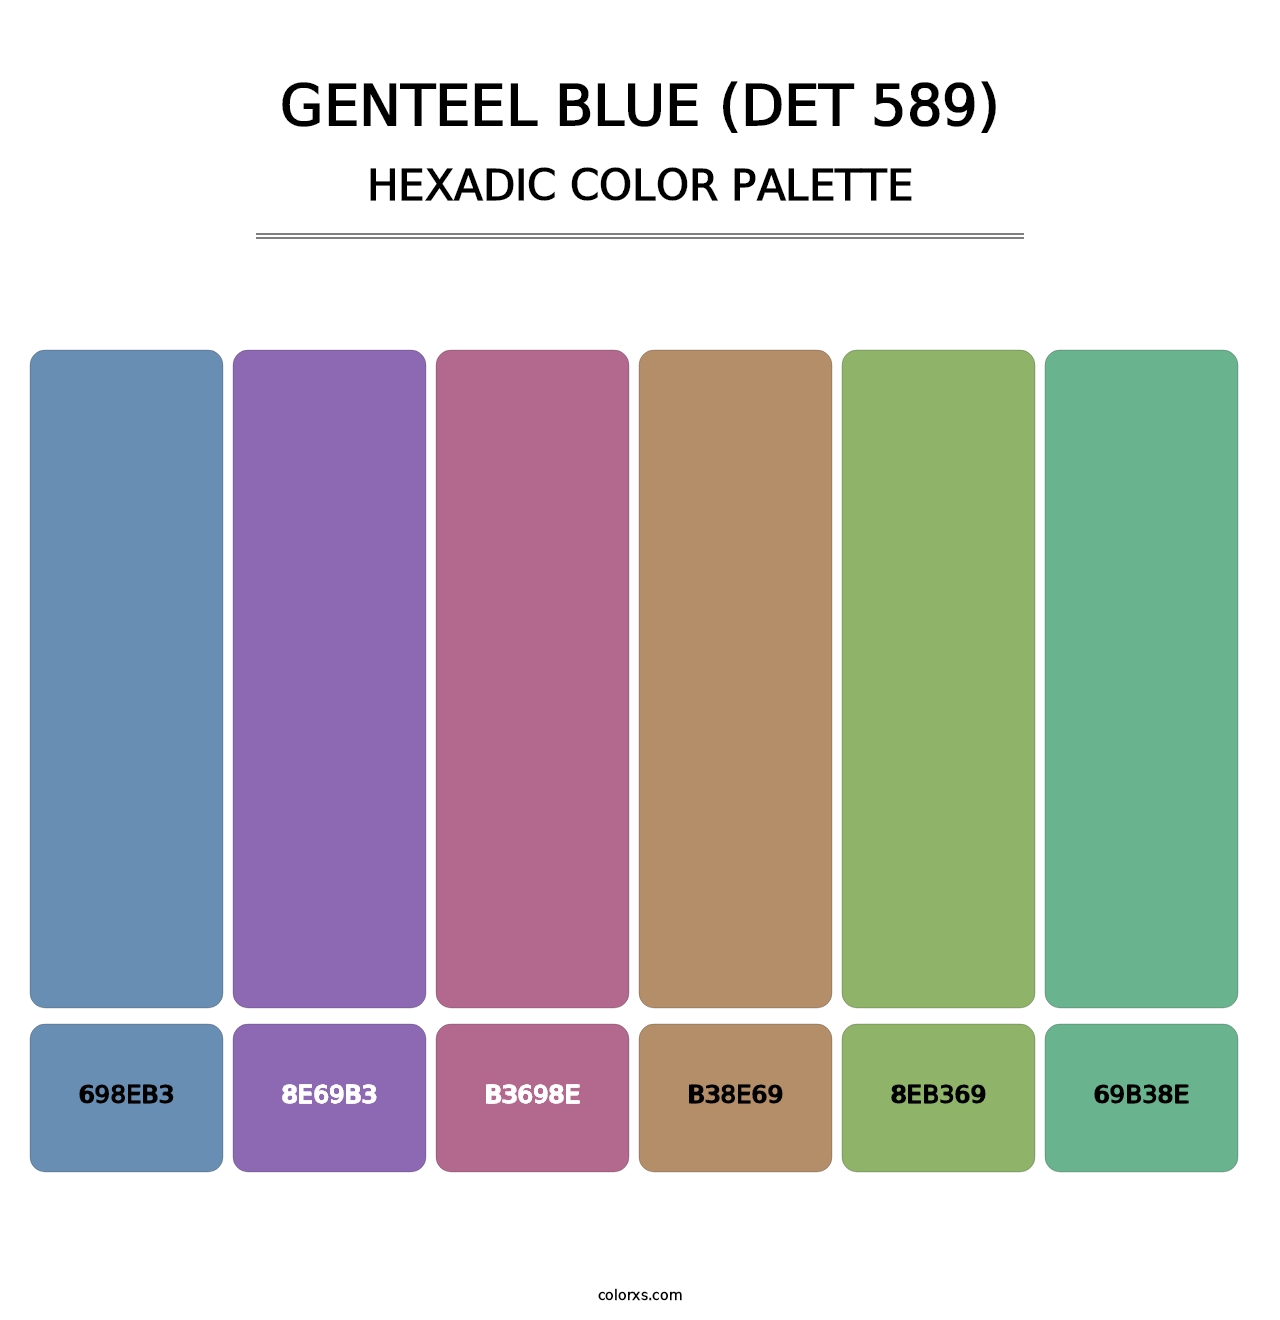 Genteel Blue (DET 589) - Hexadic Color Palette